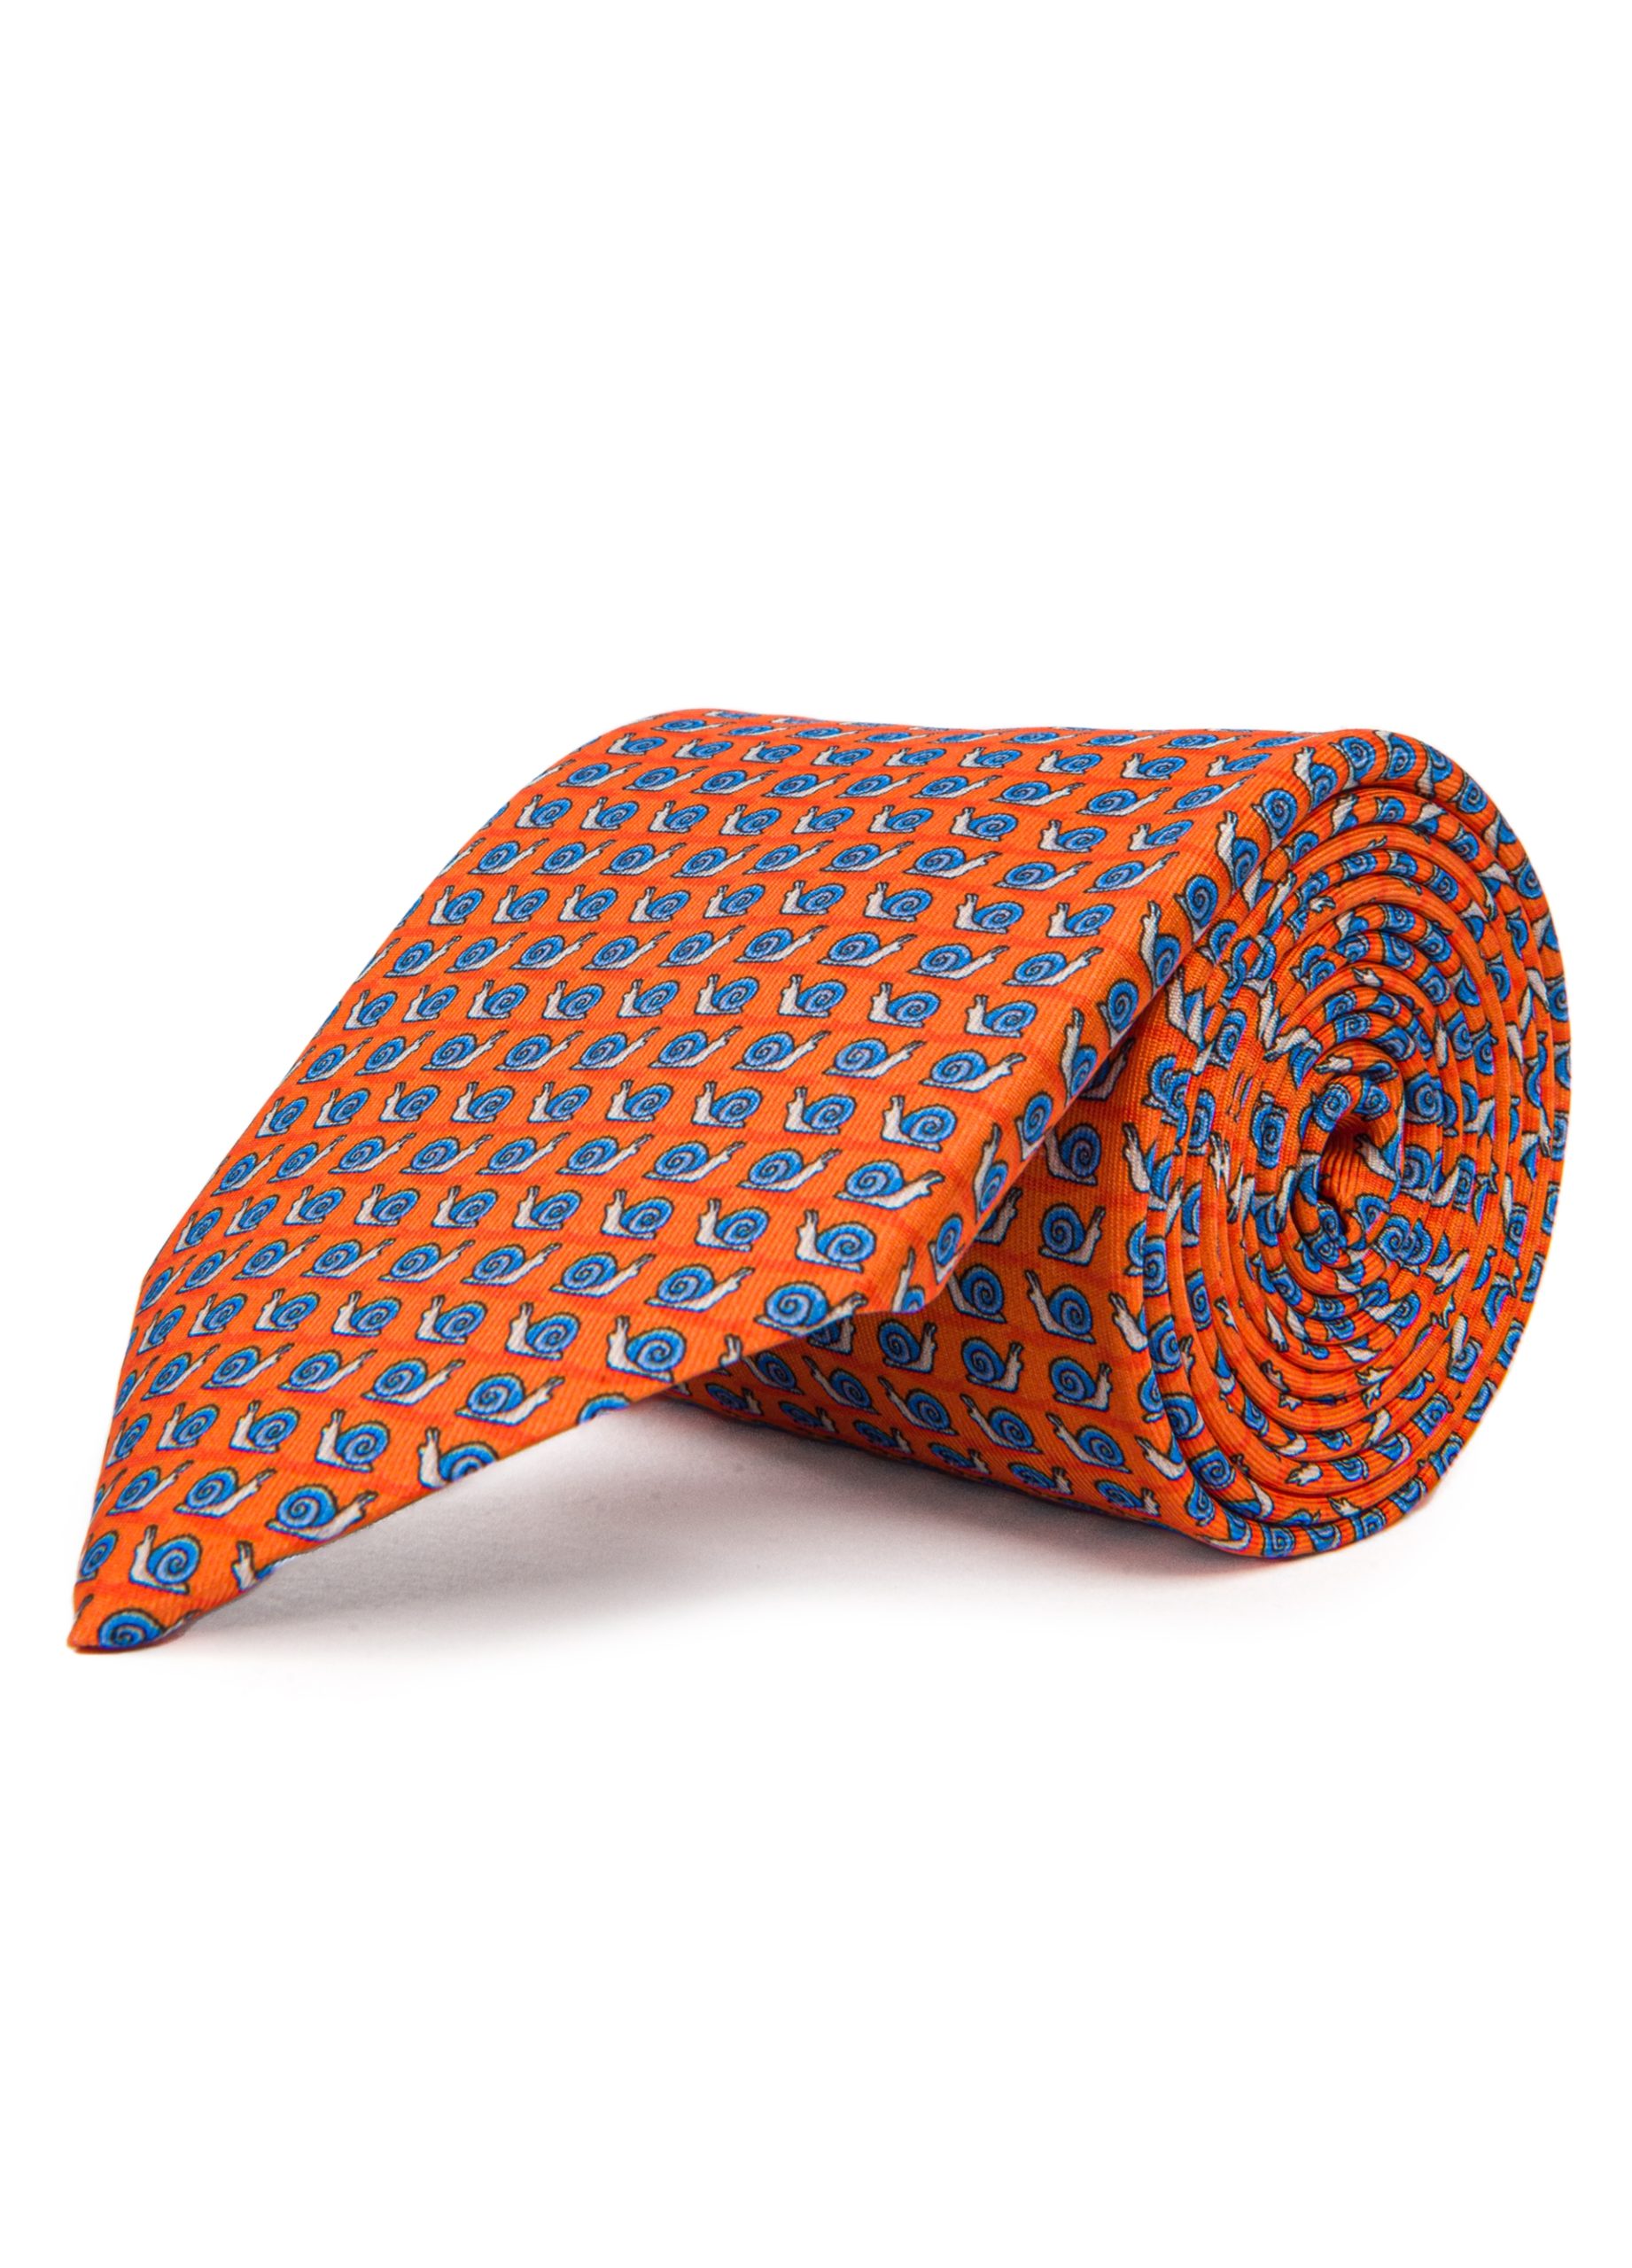 Roderick Charles silk tie in orange